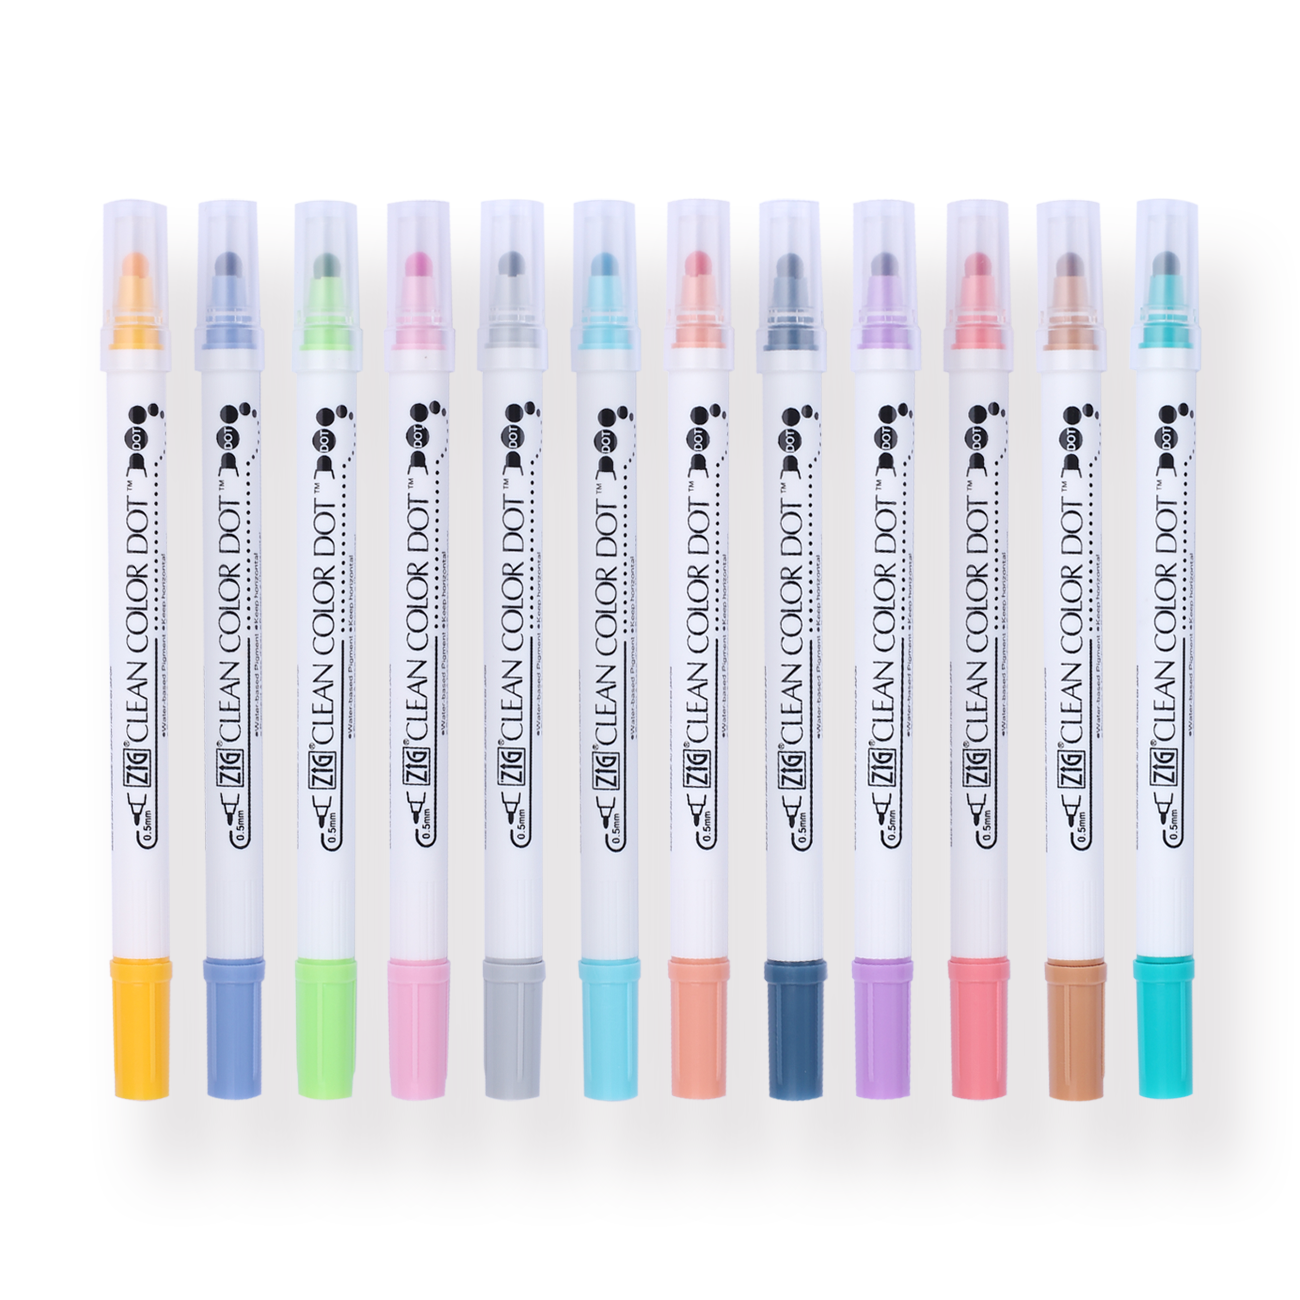 Kuretake ZIG Clean Color Dot Dual Tip Marker - 6 Metallic Color Set